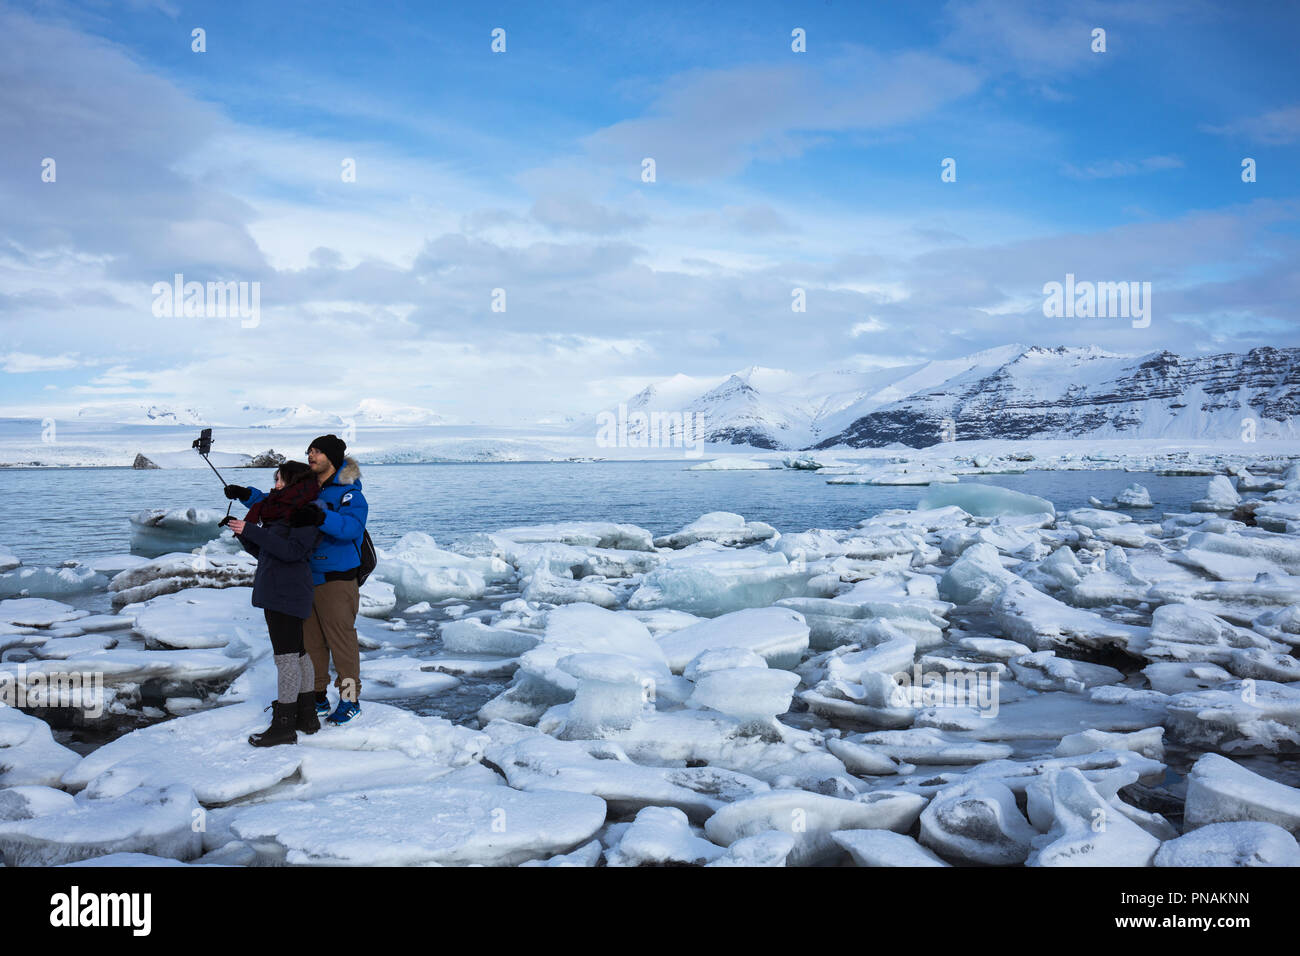 Tourists taking selfie photograph using smartphone for holiday photos at Jokulsarlon glacial lagoon, Vatnajokull National Park, South East Iceland Stock Photo